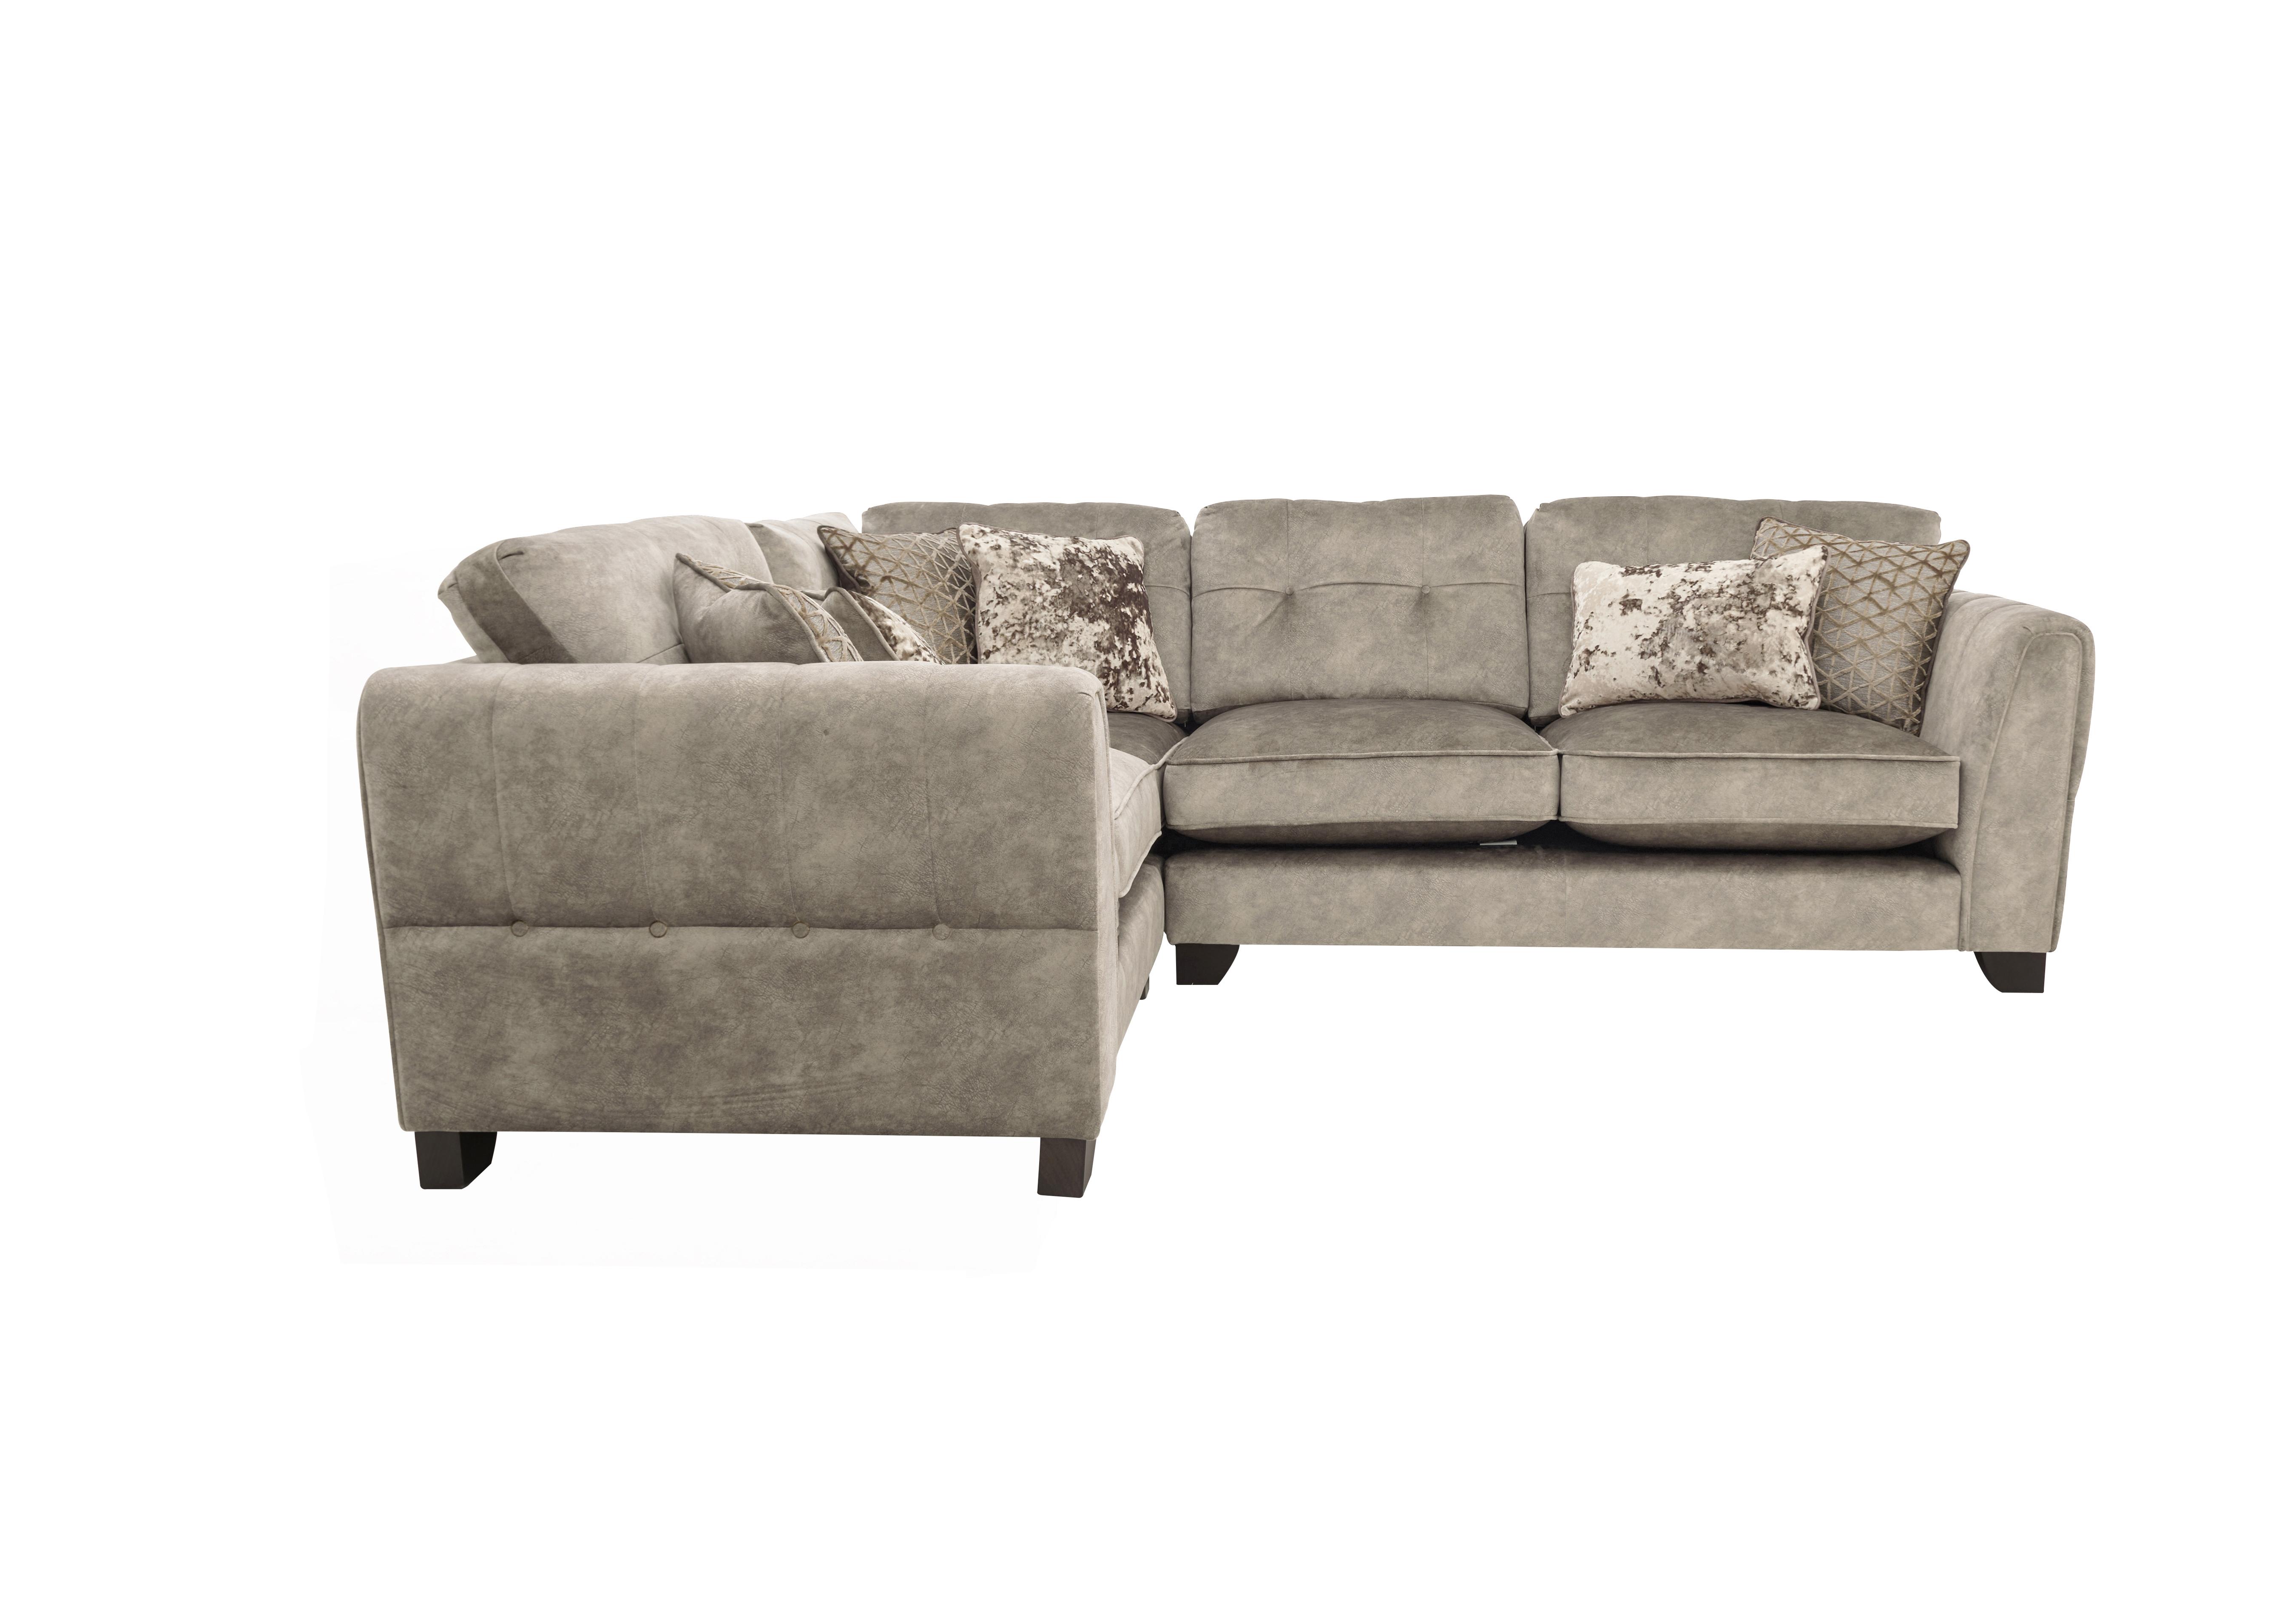 Ariana Small Fabric Classic Back Corner Sofa in Dapple Oyster No Insert on Furniture Village